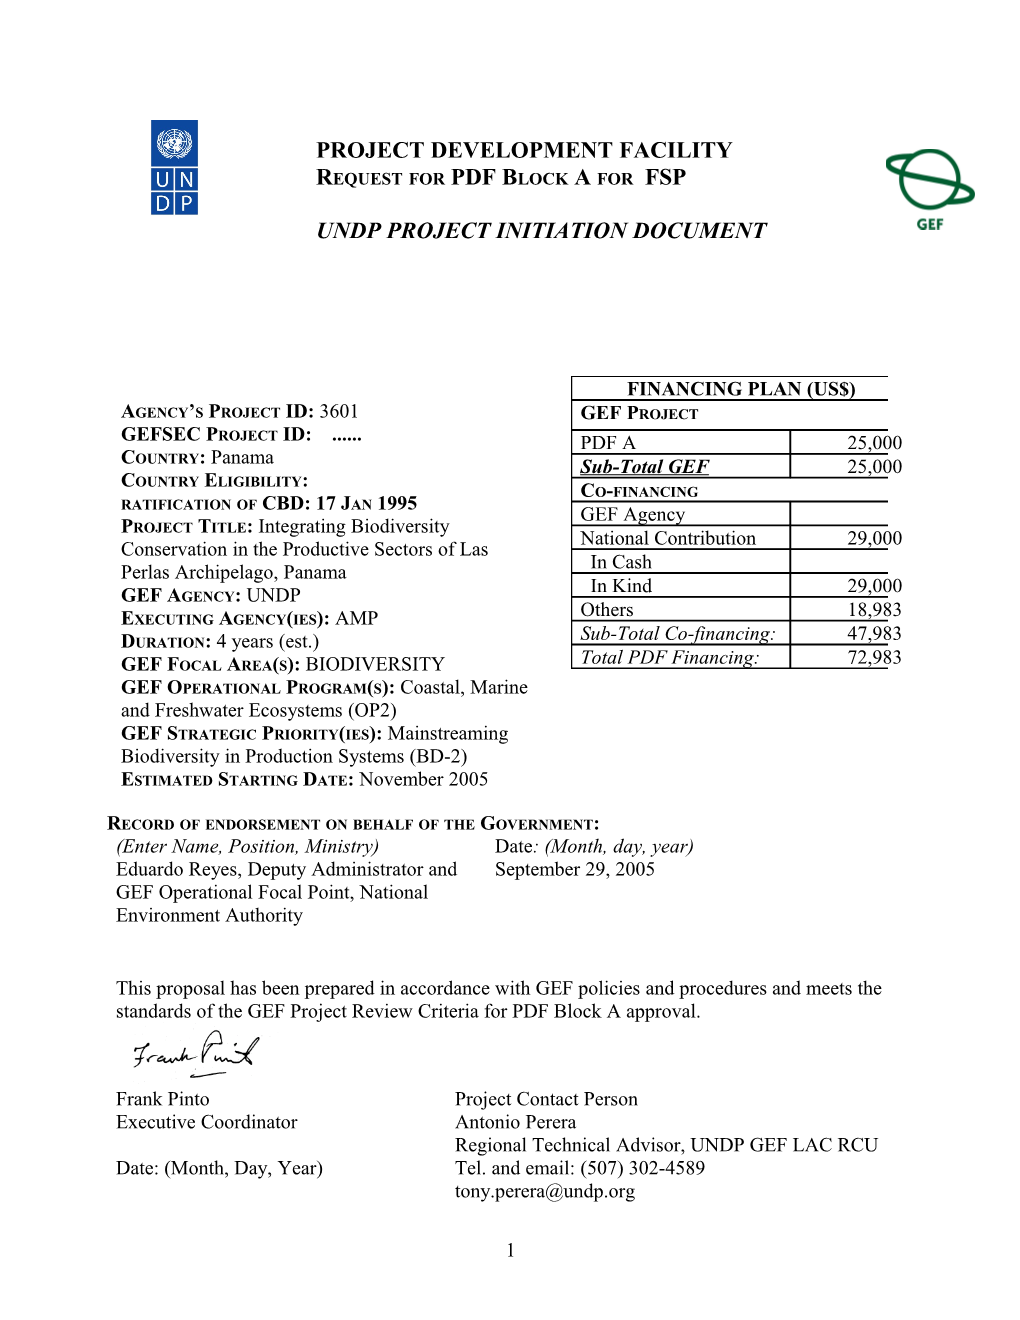 UNDP-GEF Streamlined PDF-A Format